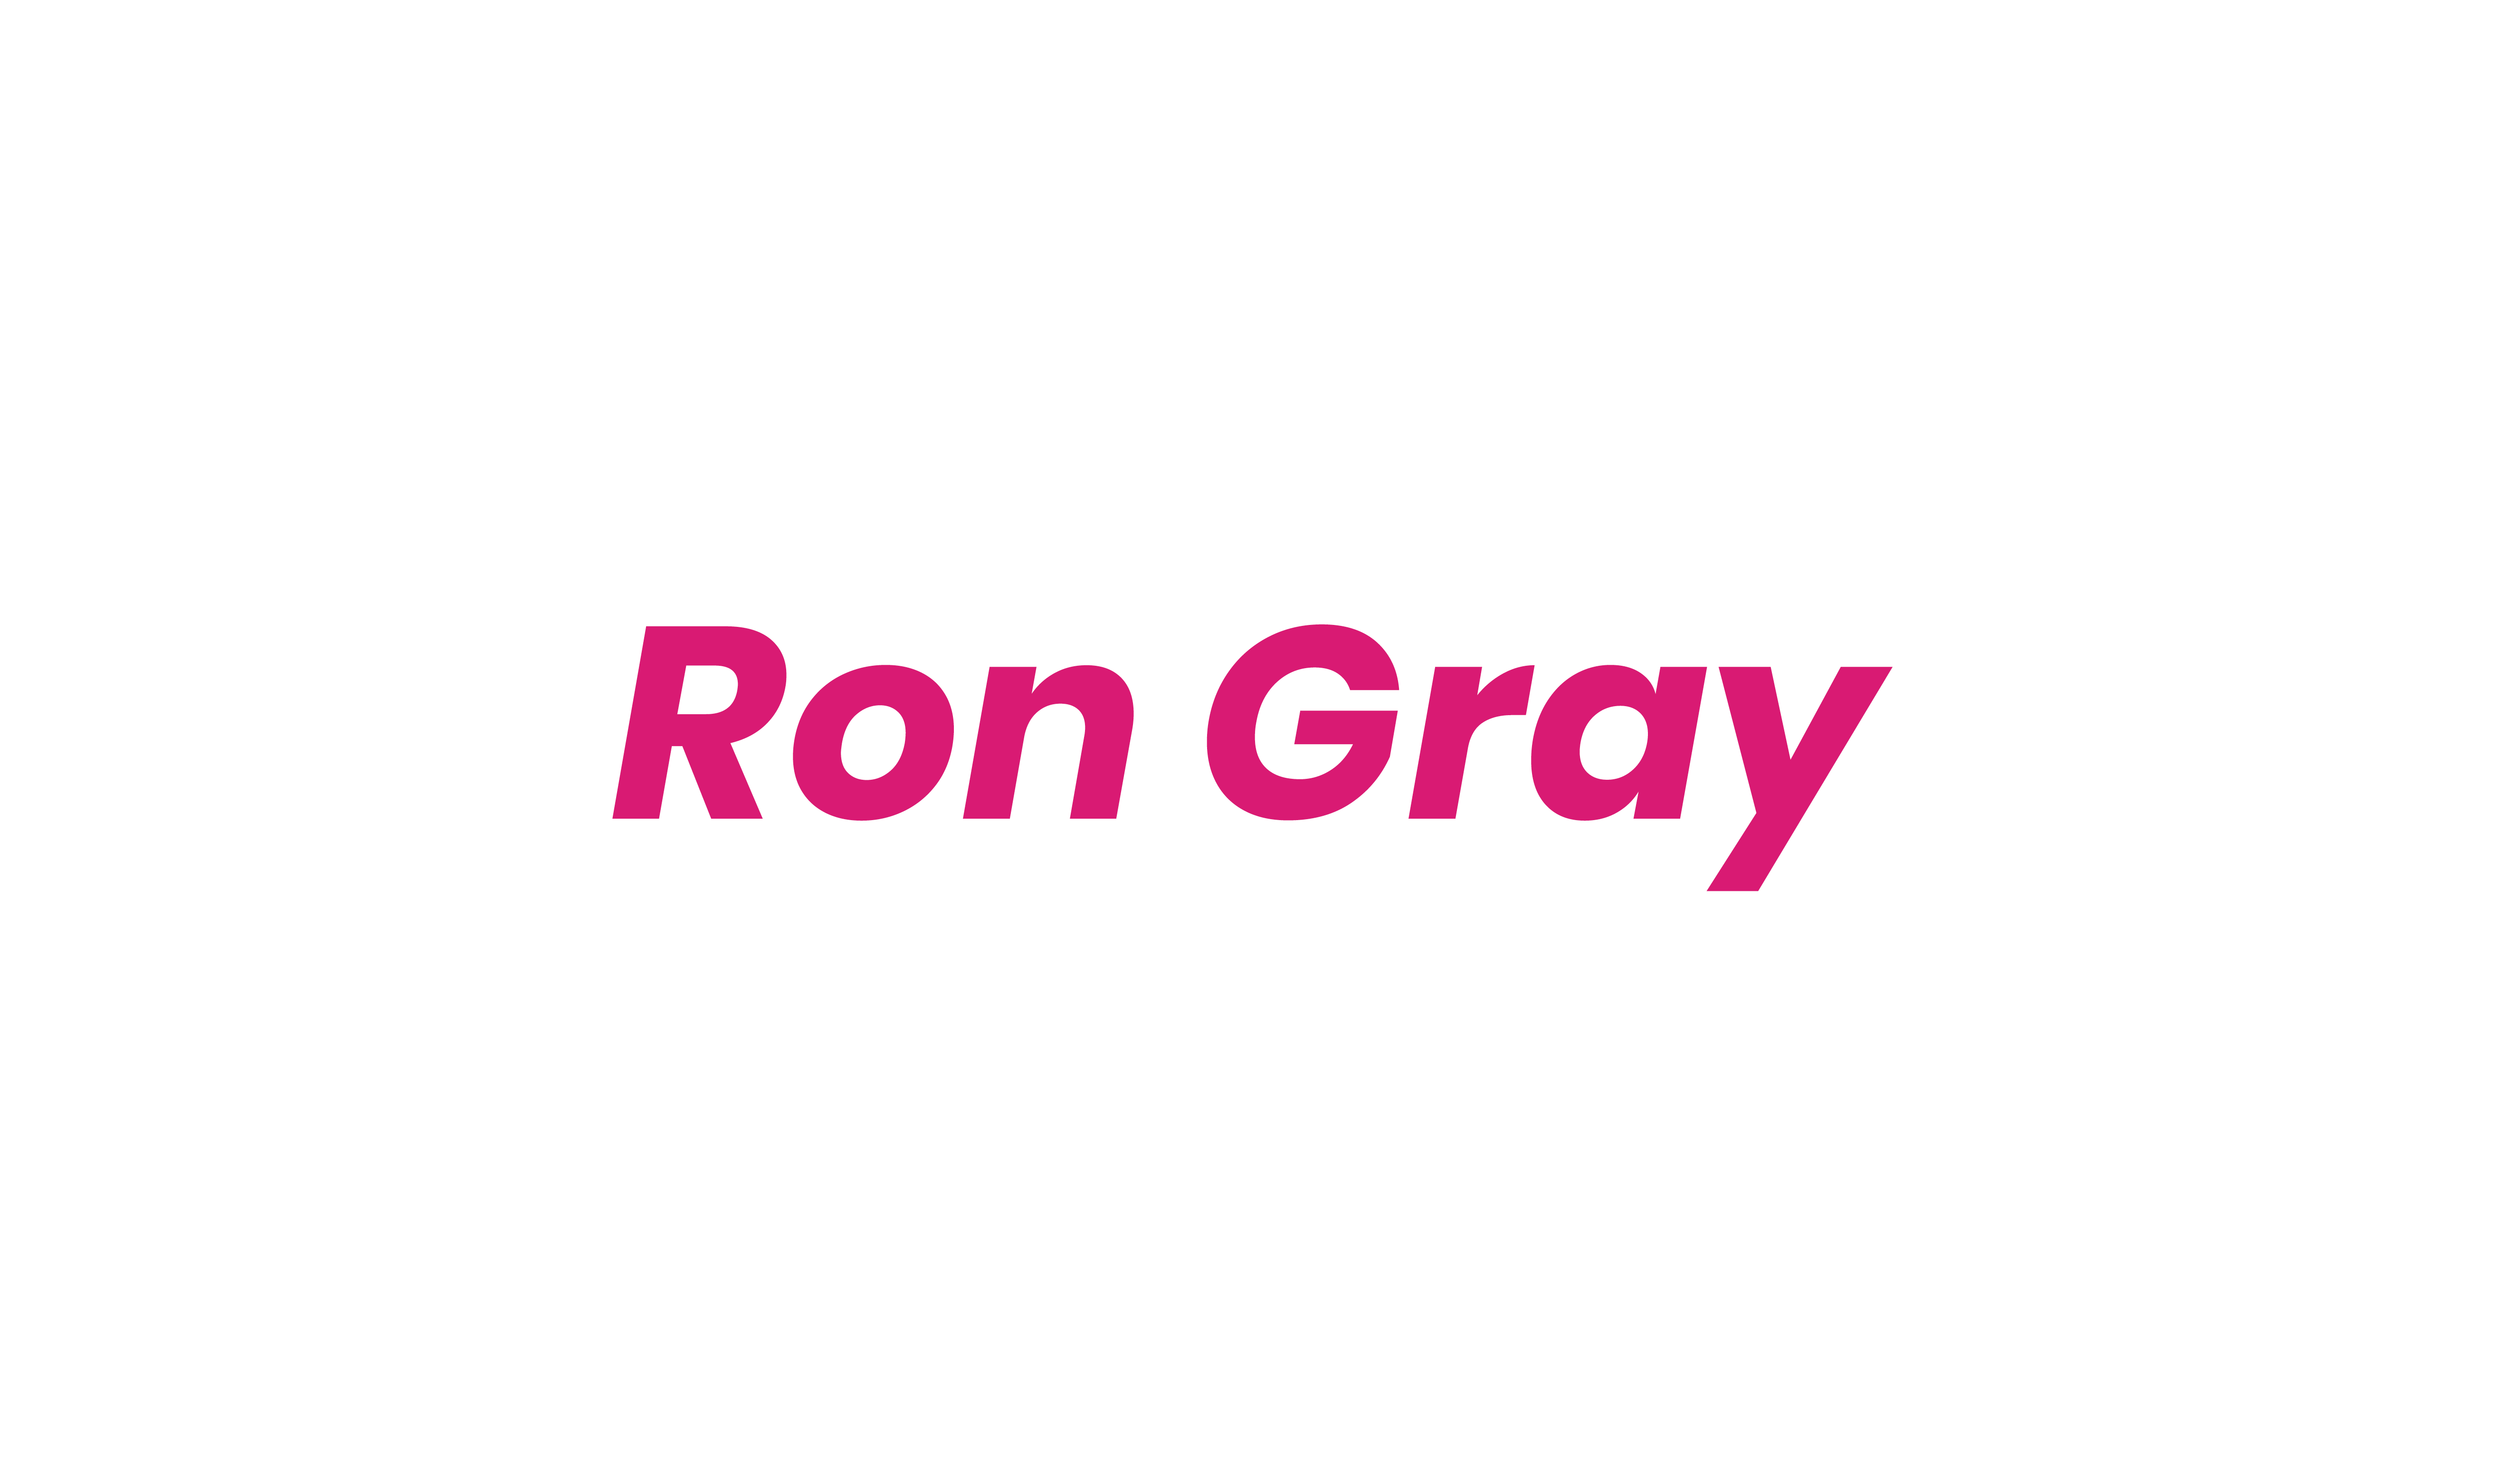 Ron Grey